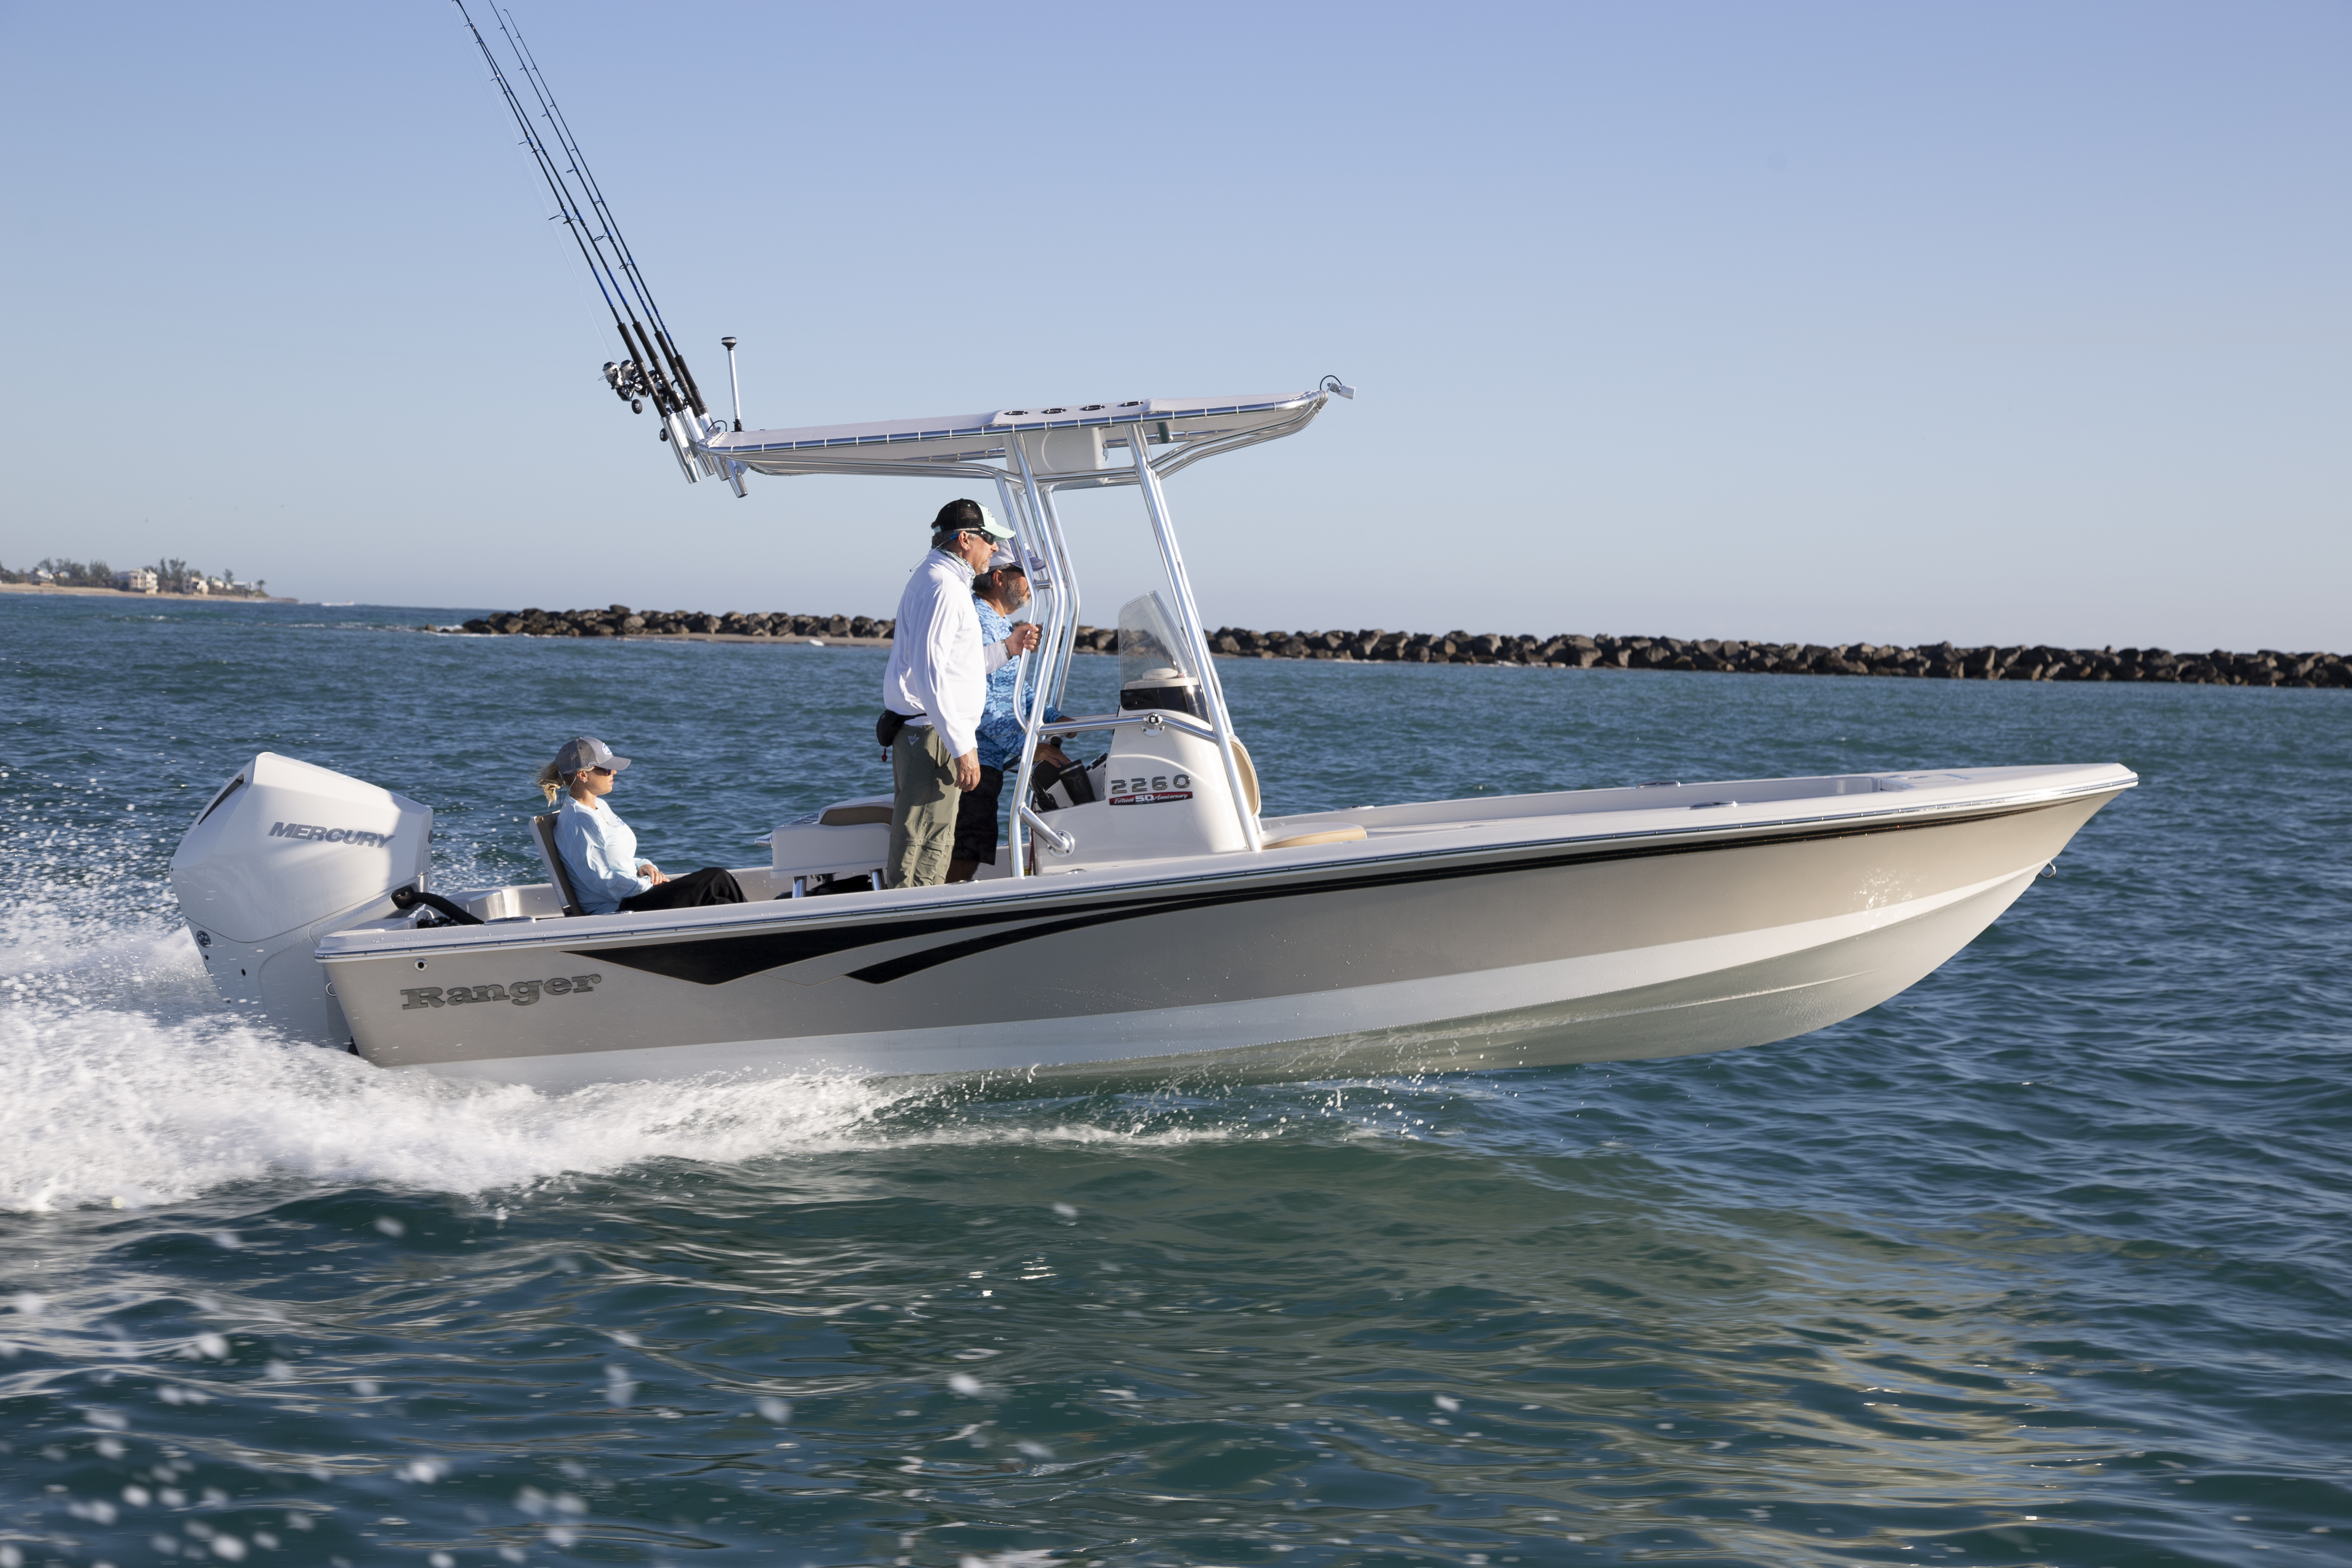 Boat Review - Ranger 2260 Bay